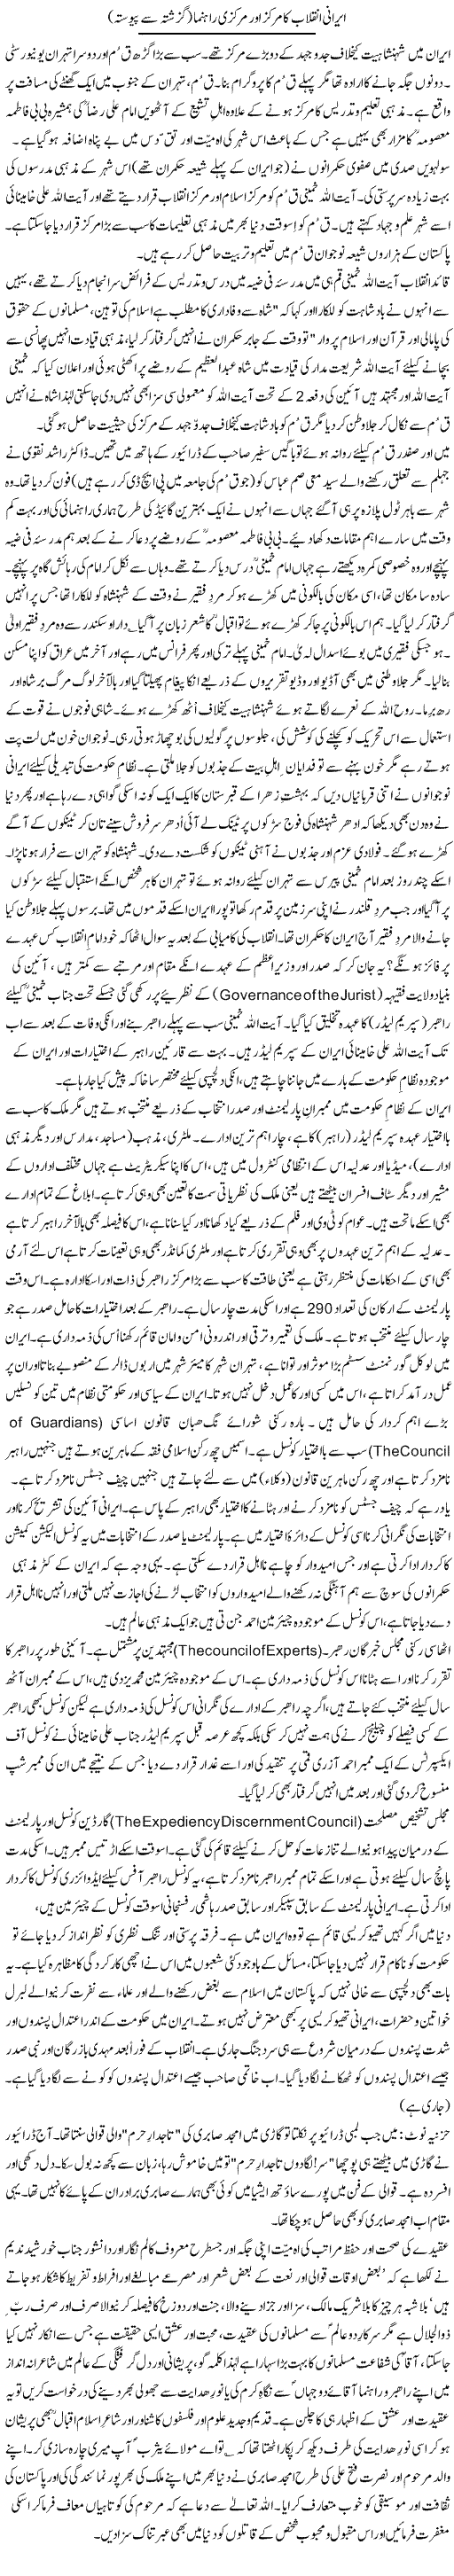 Irani Inqelab Ka Markaz Aur Markazi Rehnuma (3) | Zulfiqar Ahmed Cheema | Daily Urdu Columns